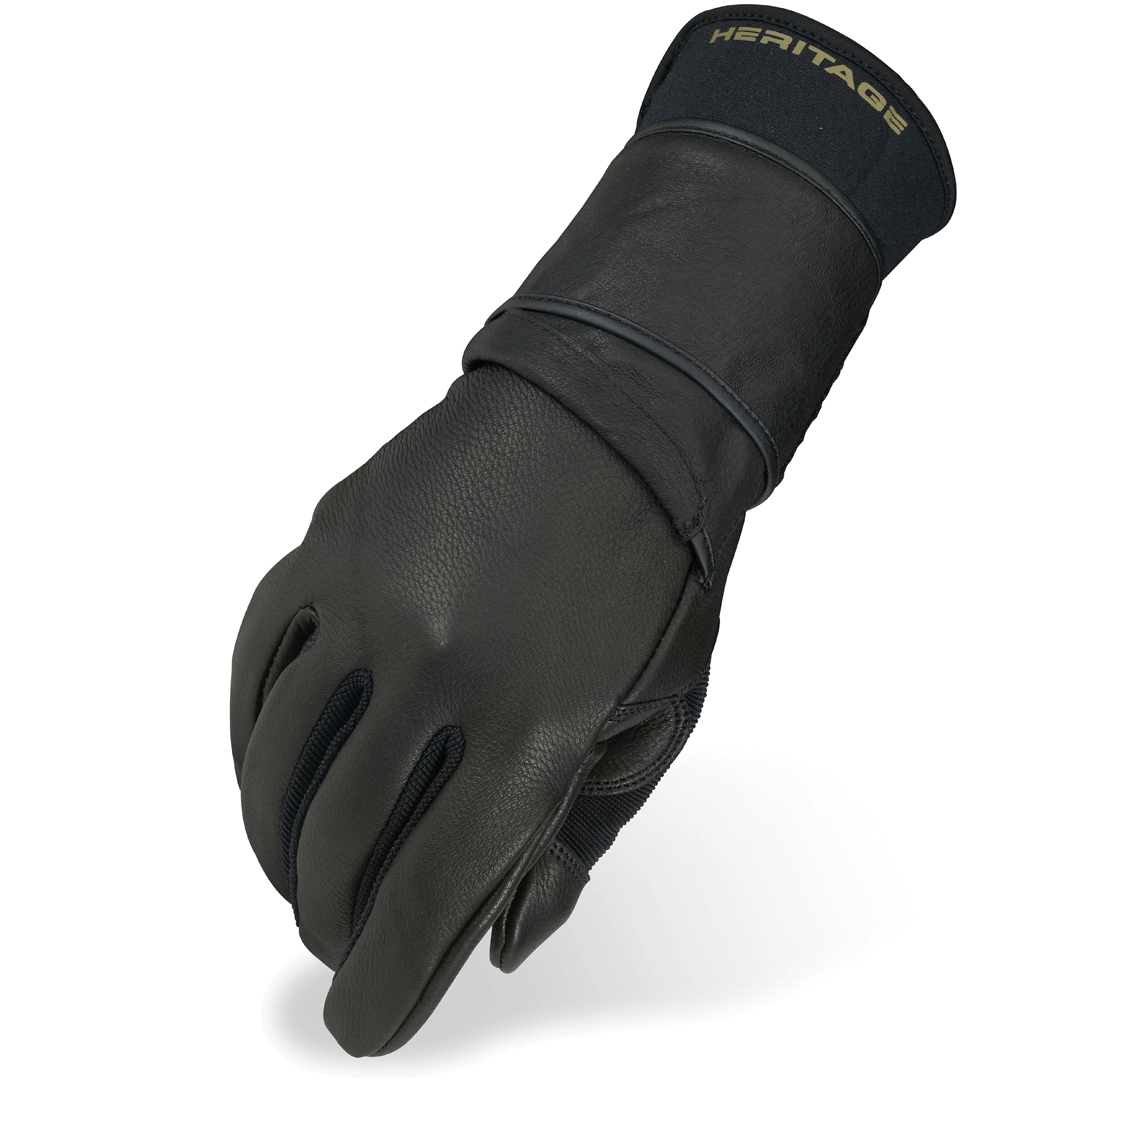 Heritage Pro 8.0 Bull Riding Gloves Black Size 10 